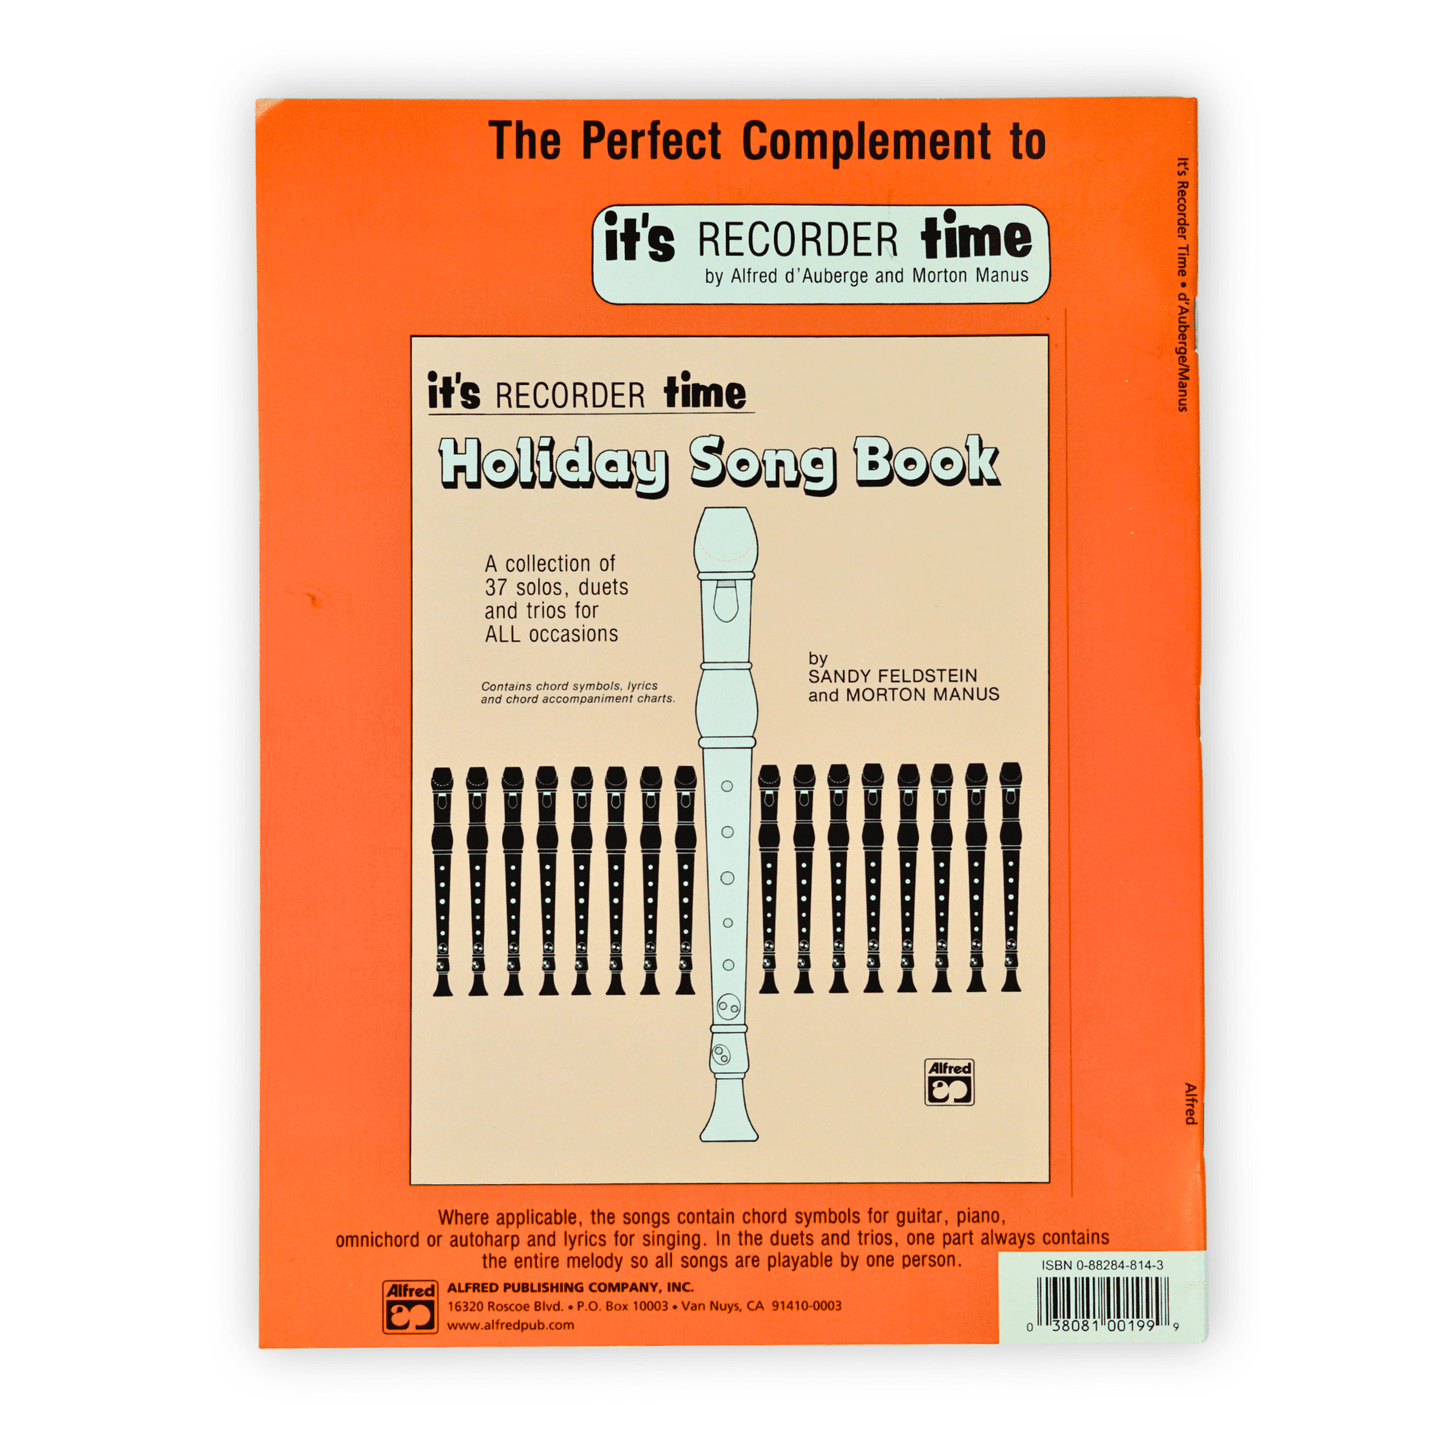 It's Recorder Time by Alfred d'Auberge & Morton Manus- Q280 - Empire Music Co. Ltd-Books-EMUS